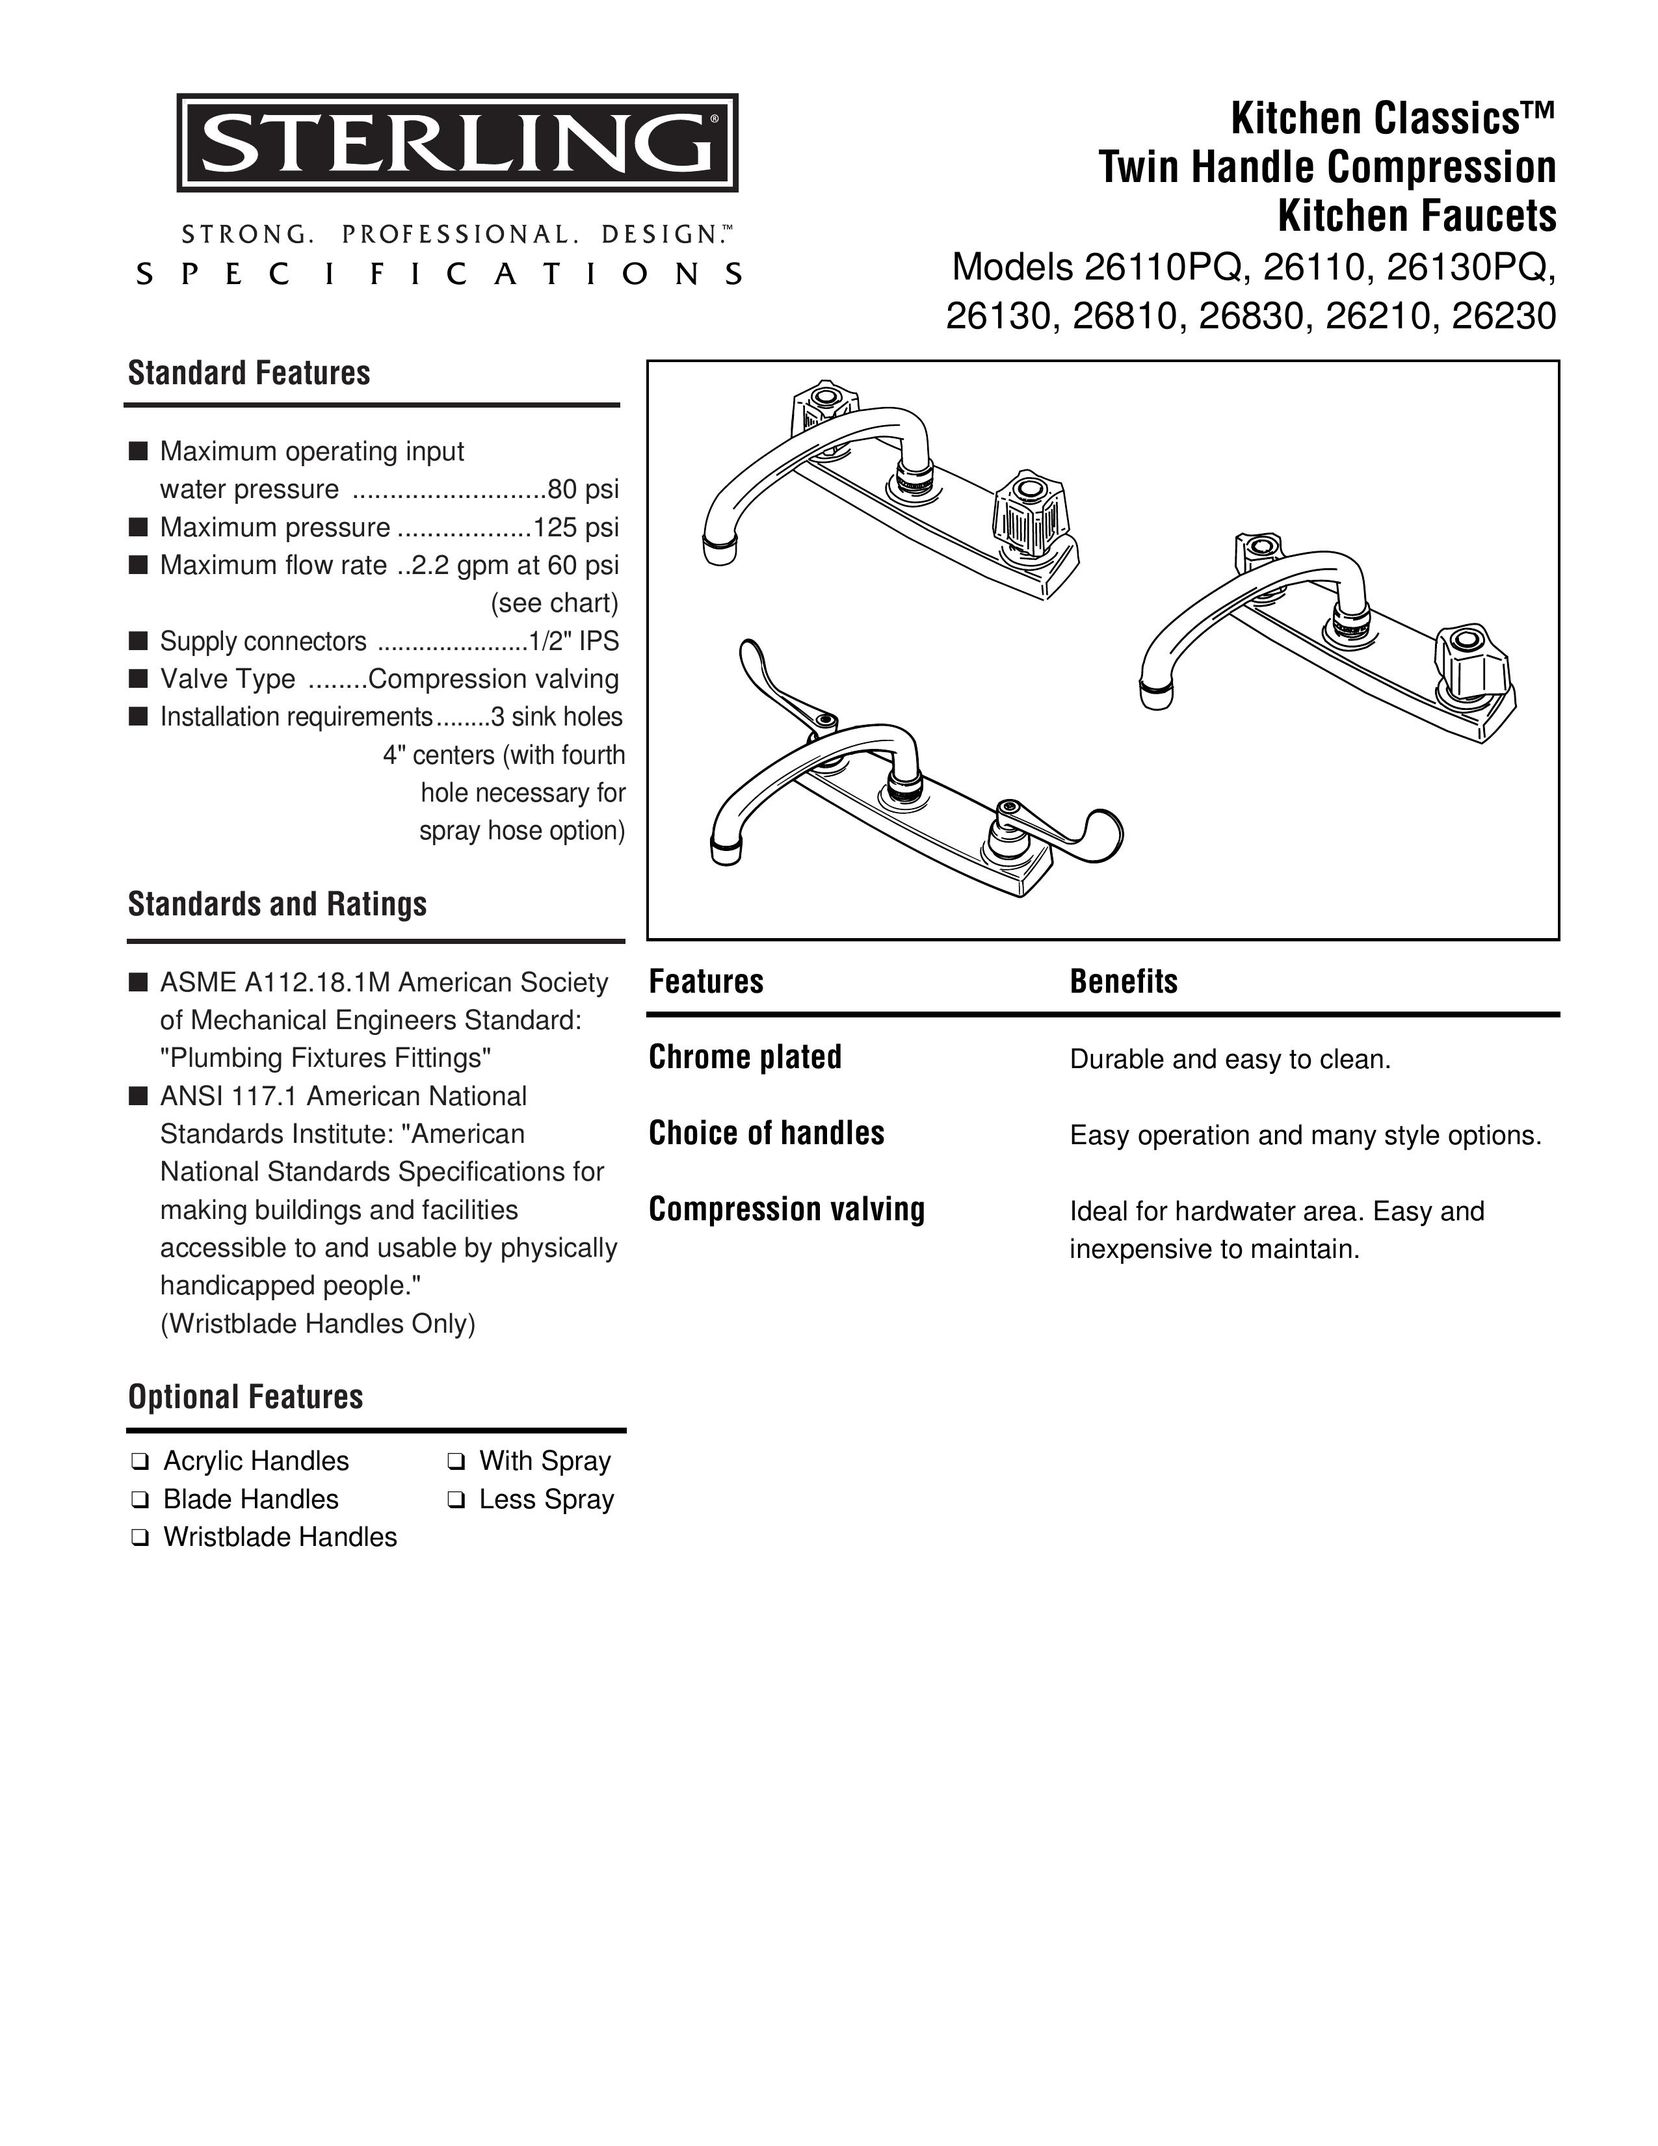 Sterling Plumbing 26210 Indoor Furnishings User Manual